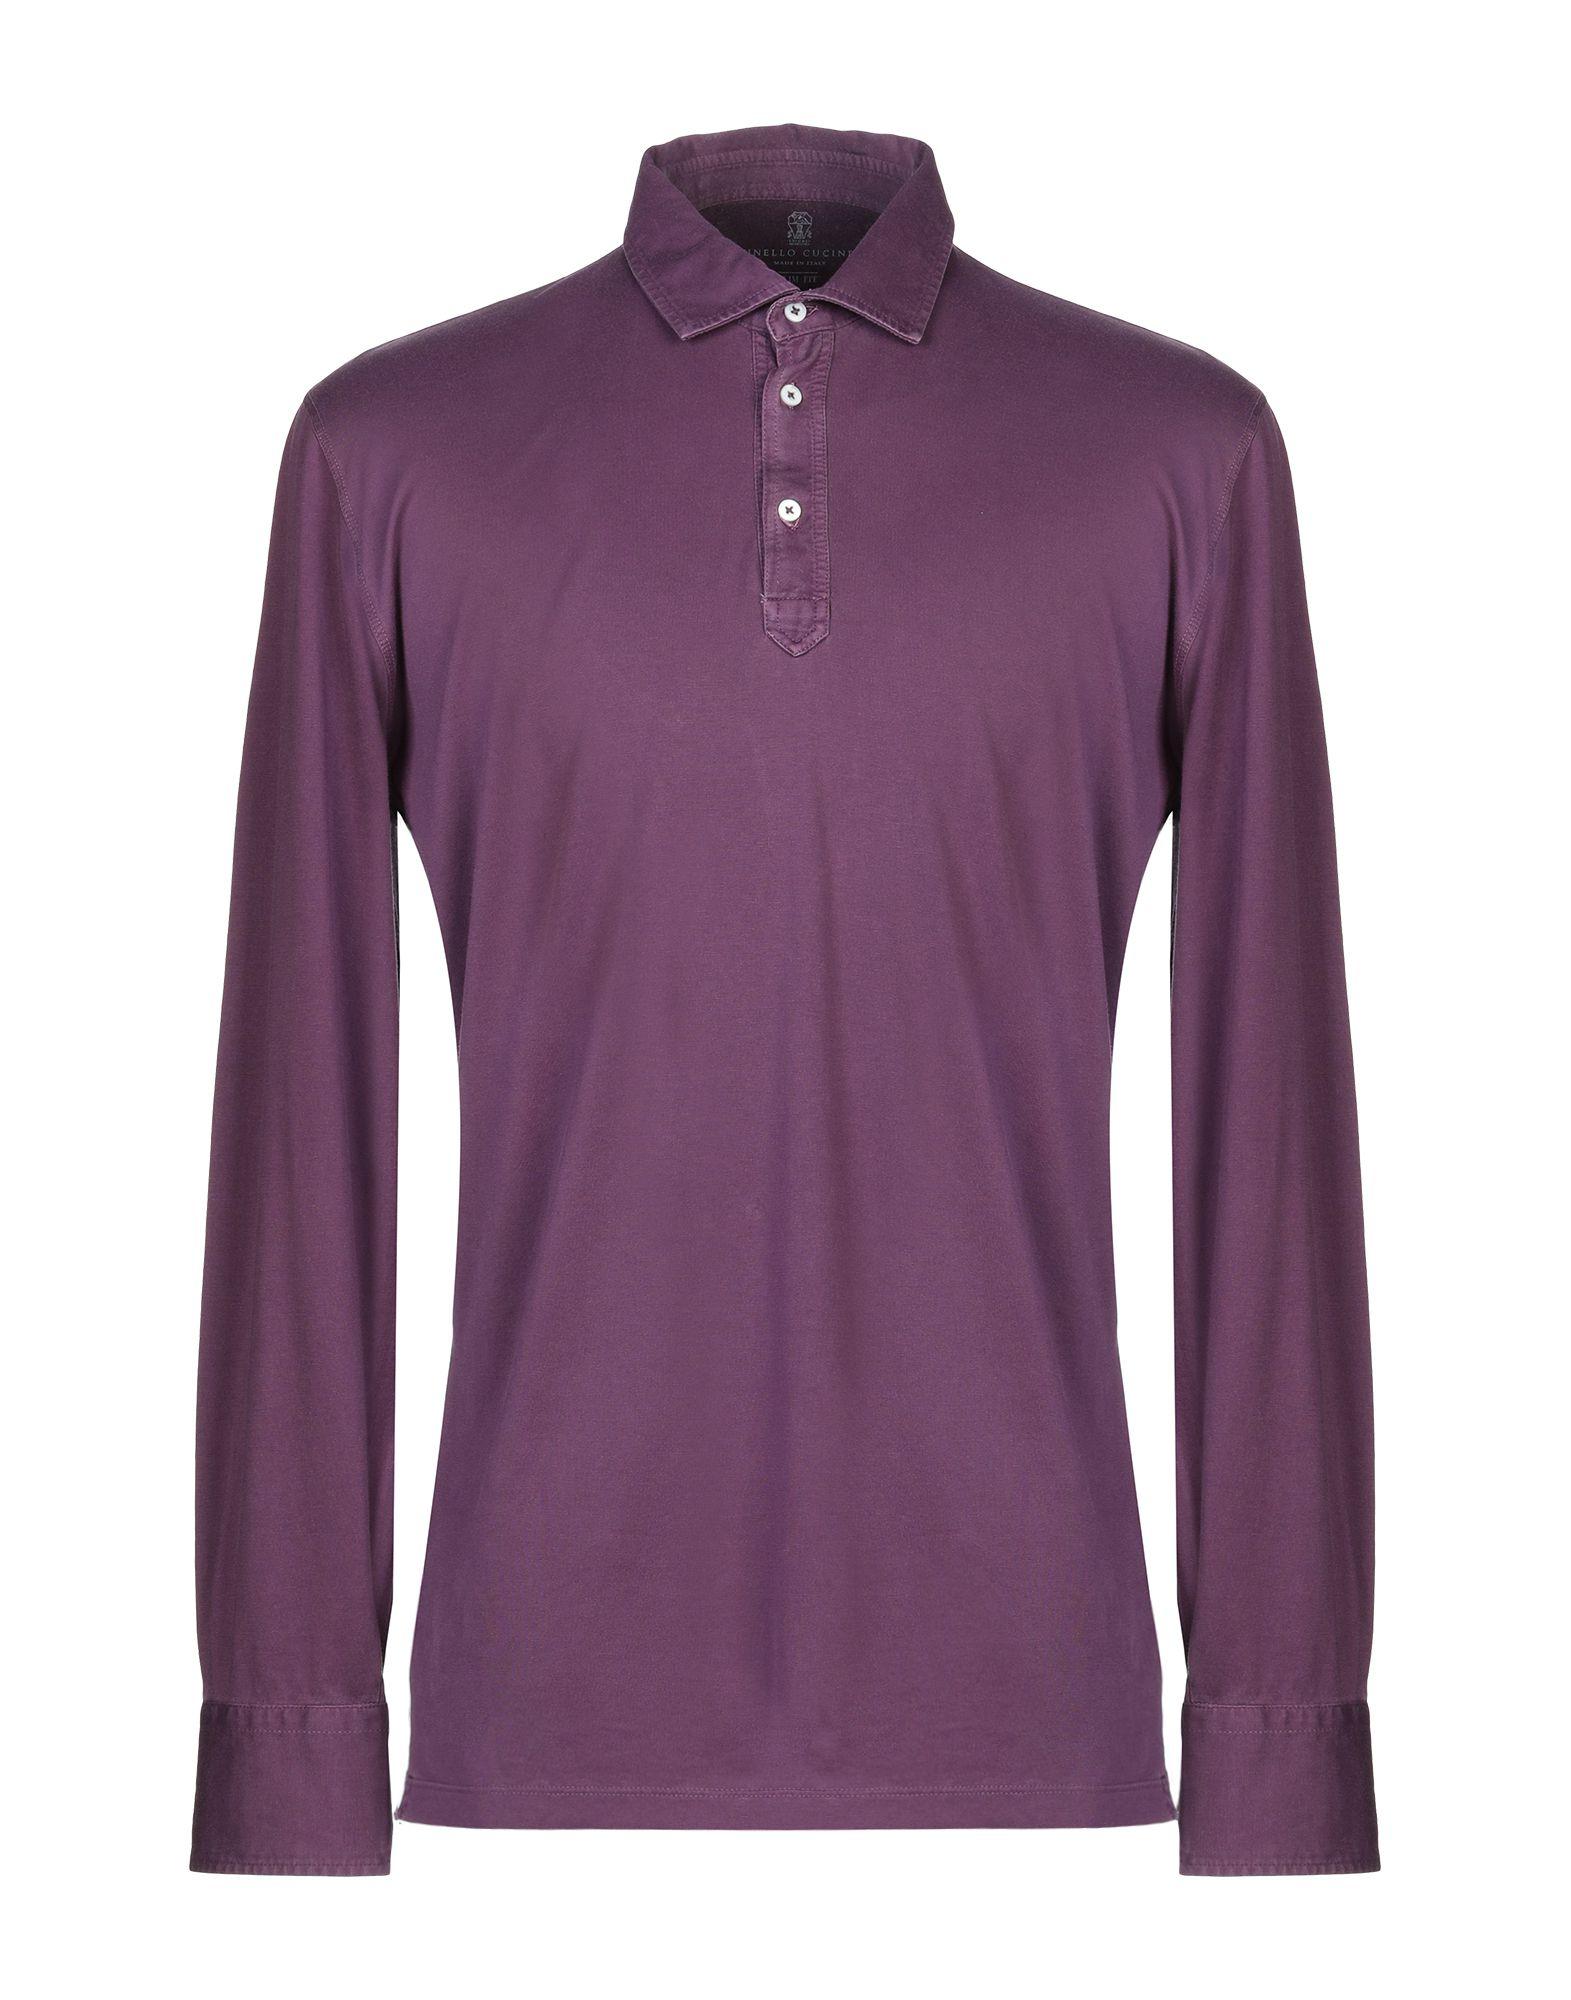 Brunello Cucinelli Cotton Polo Shirt in Purple for Men - Lyst